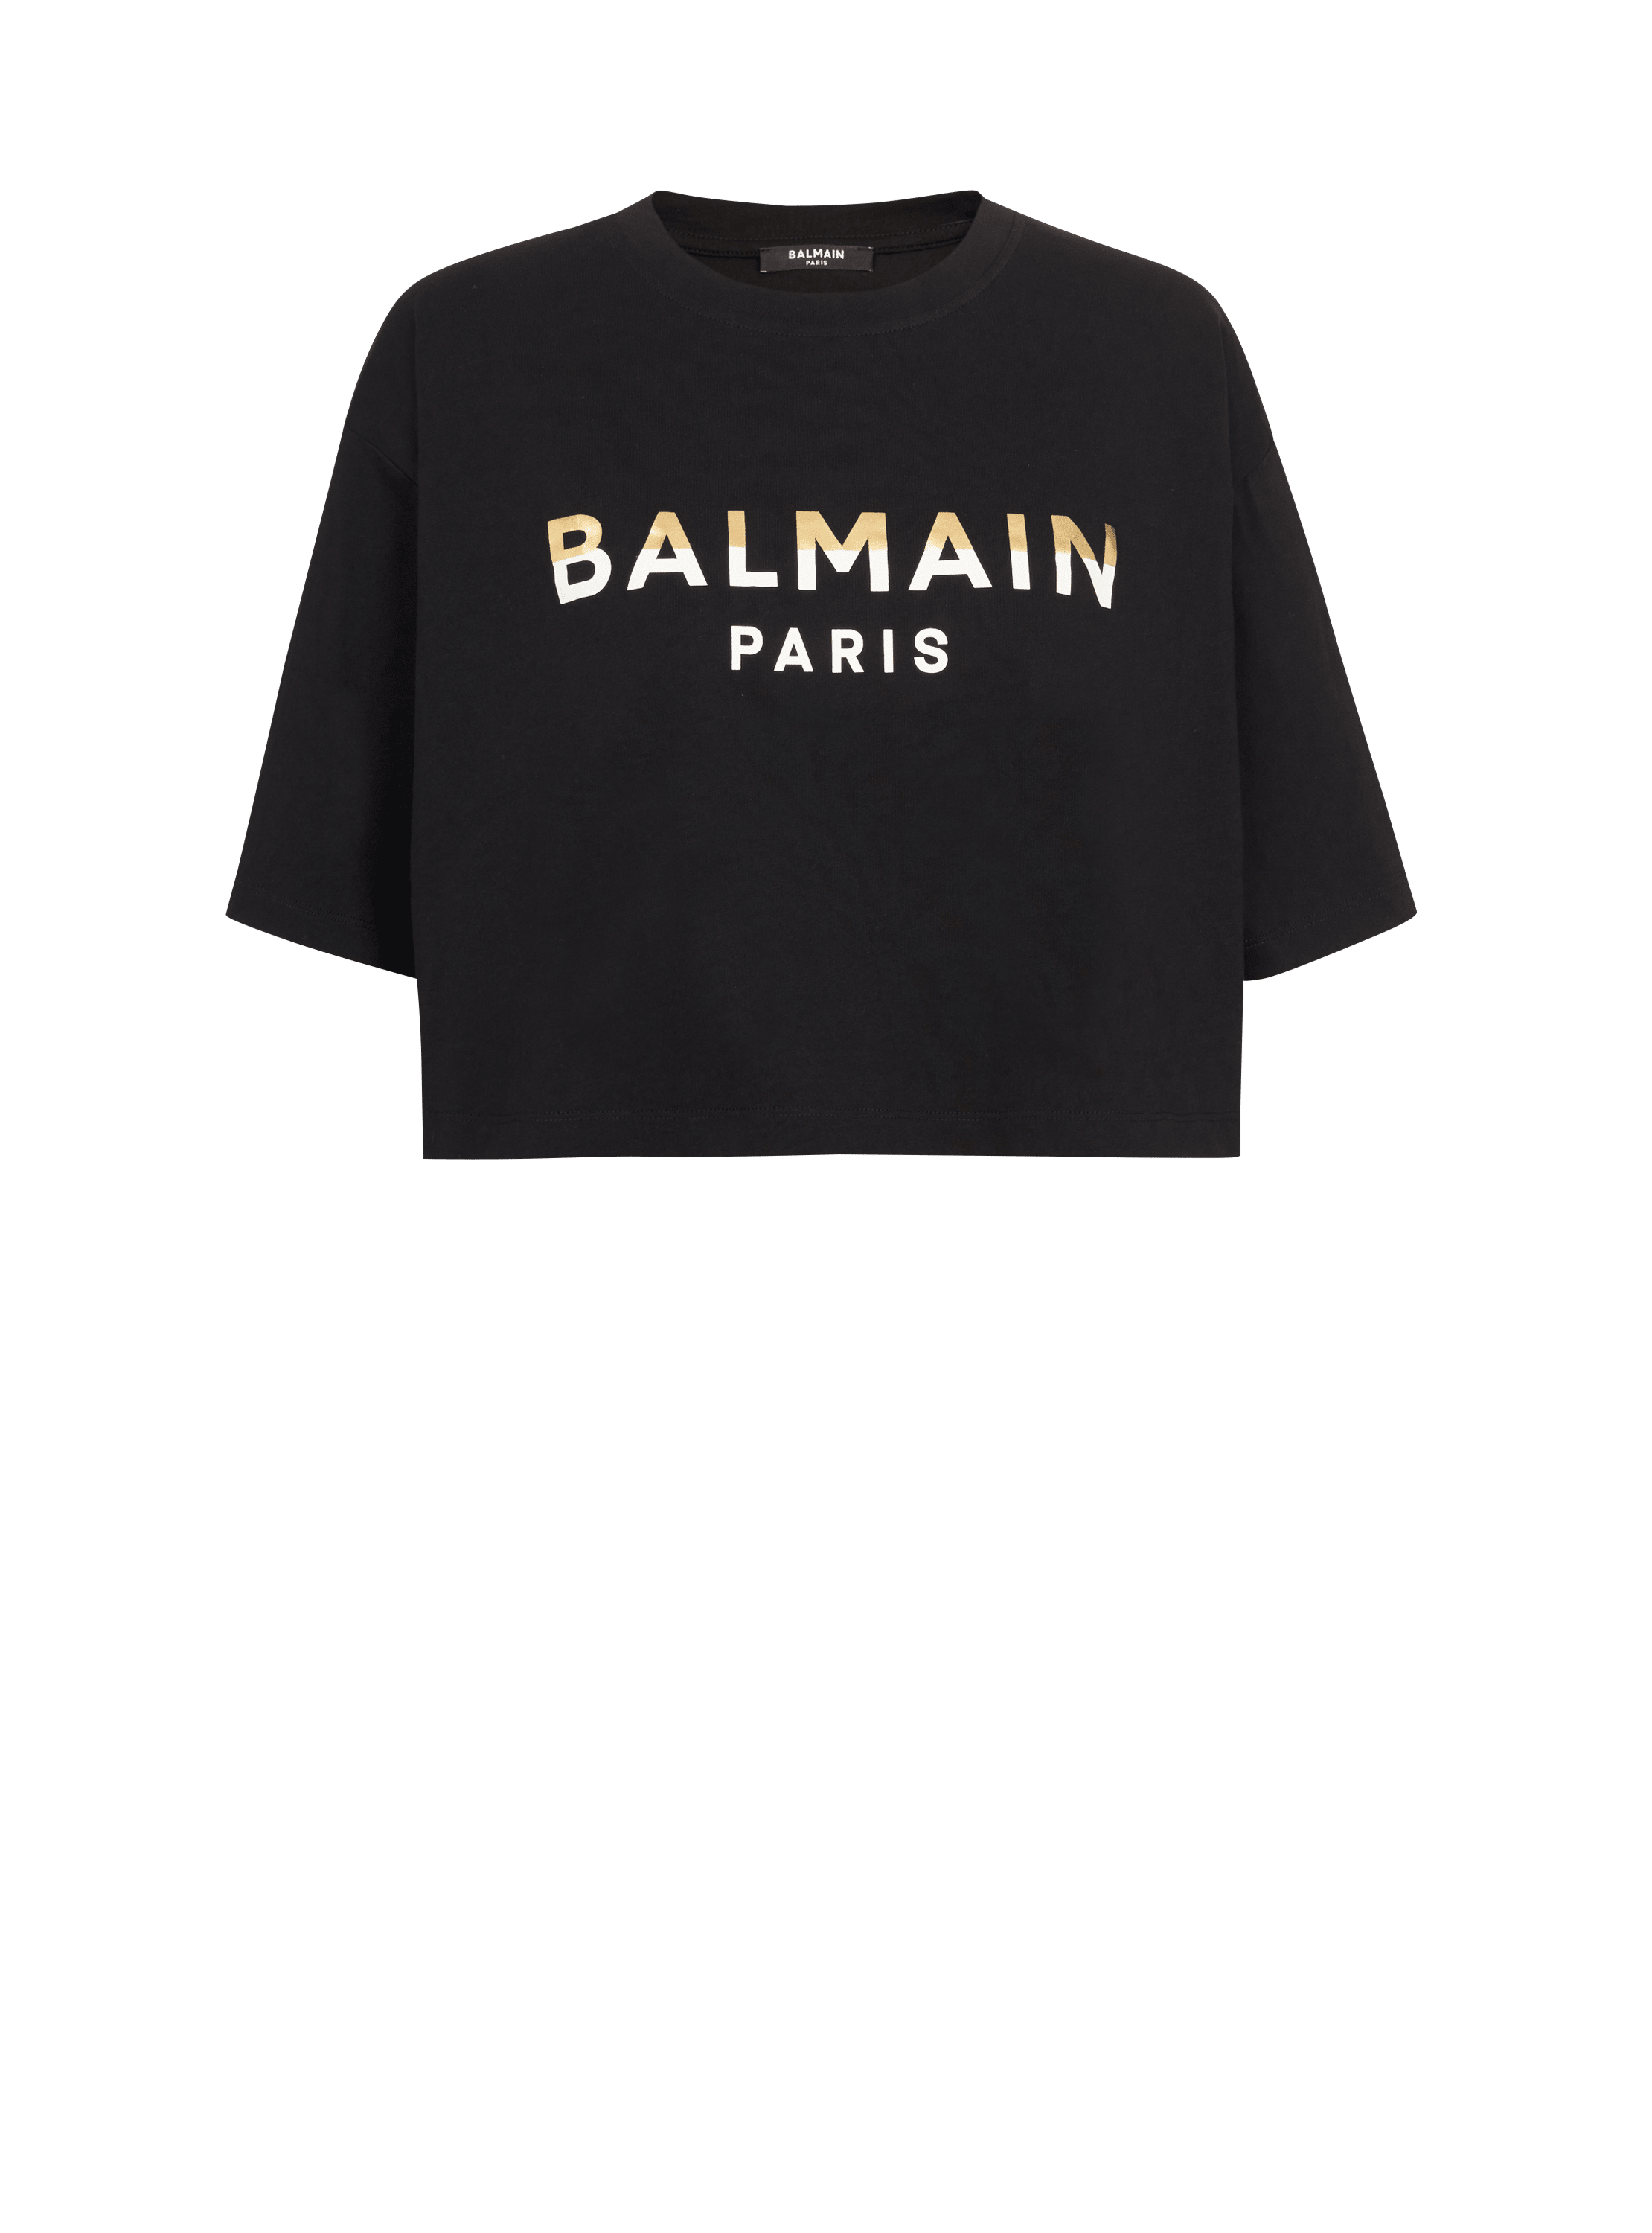 T-shirt court Balmain Paris, noir, hi-res